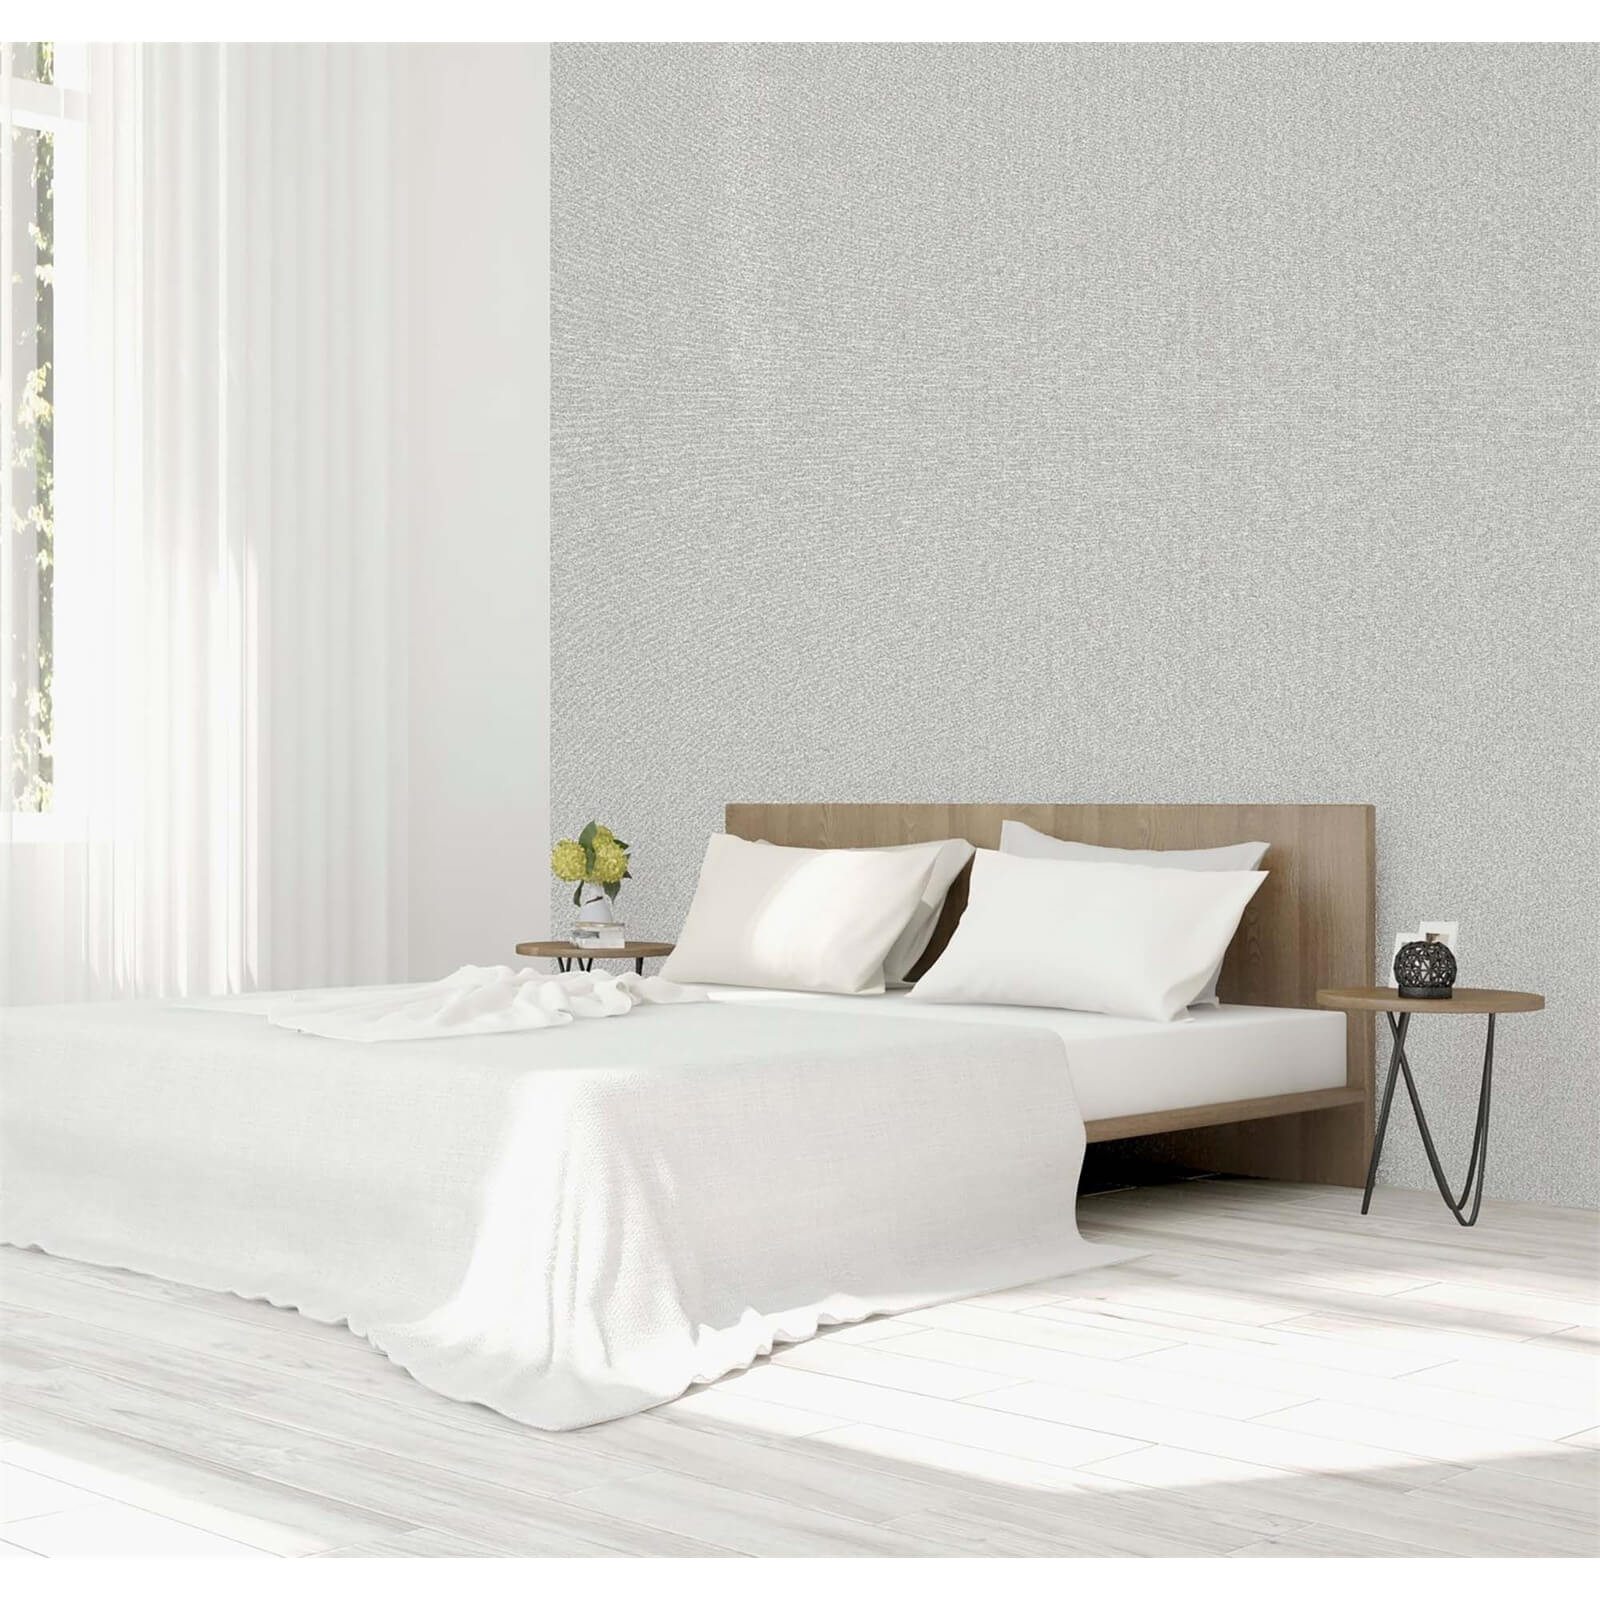 Arthouse Calico Plain Grey Wallpaper